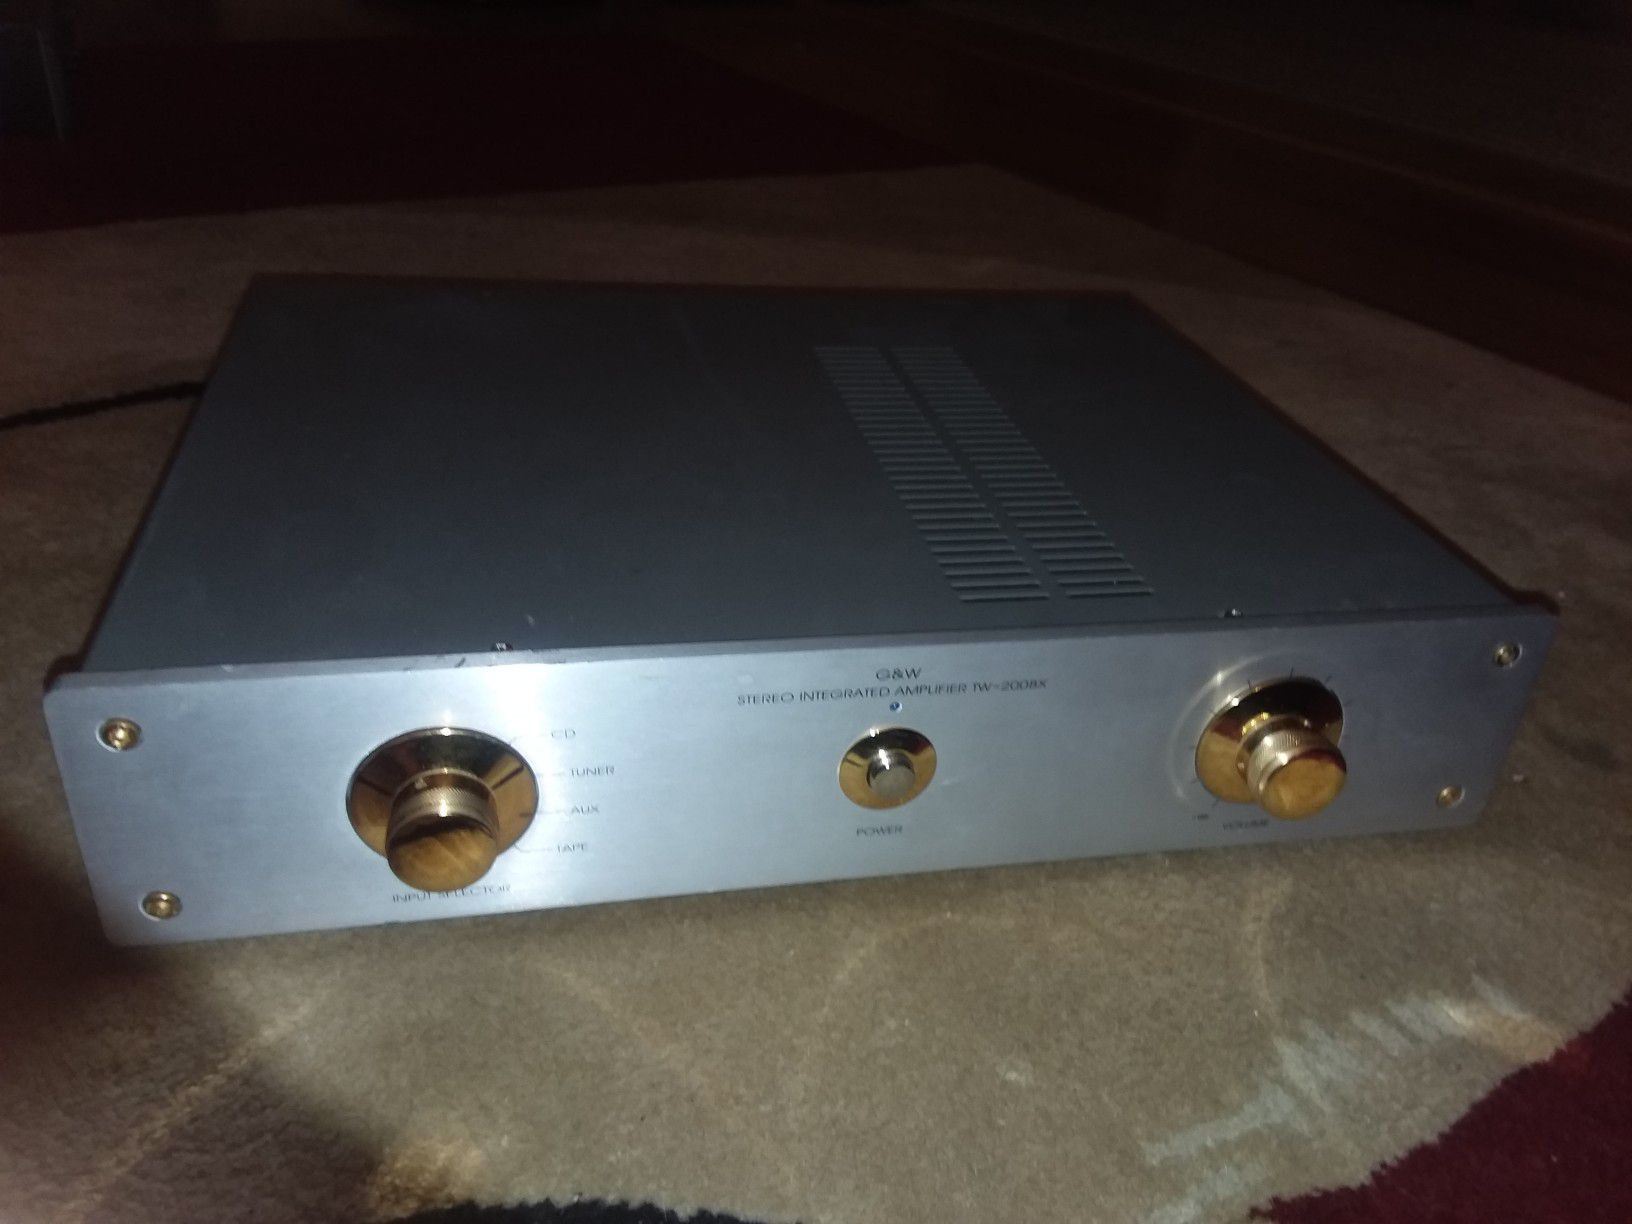 G&W Stereo integrated amplifier TW-2008X 2X100W 4-8 ohms